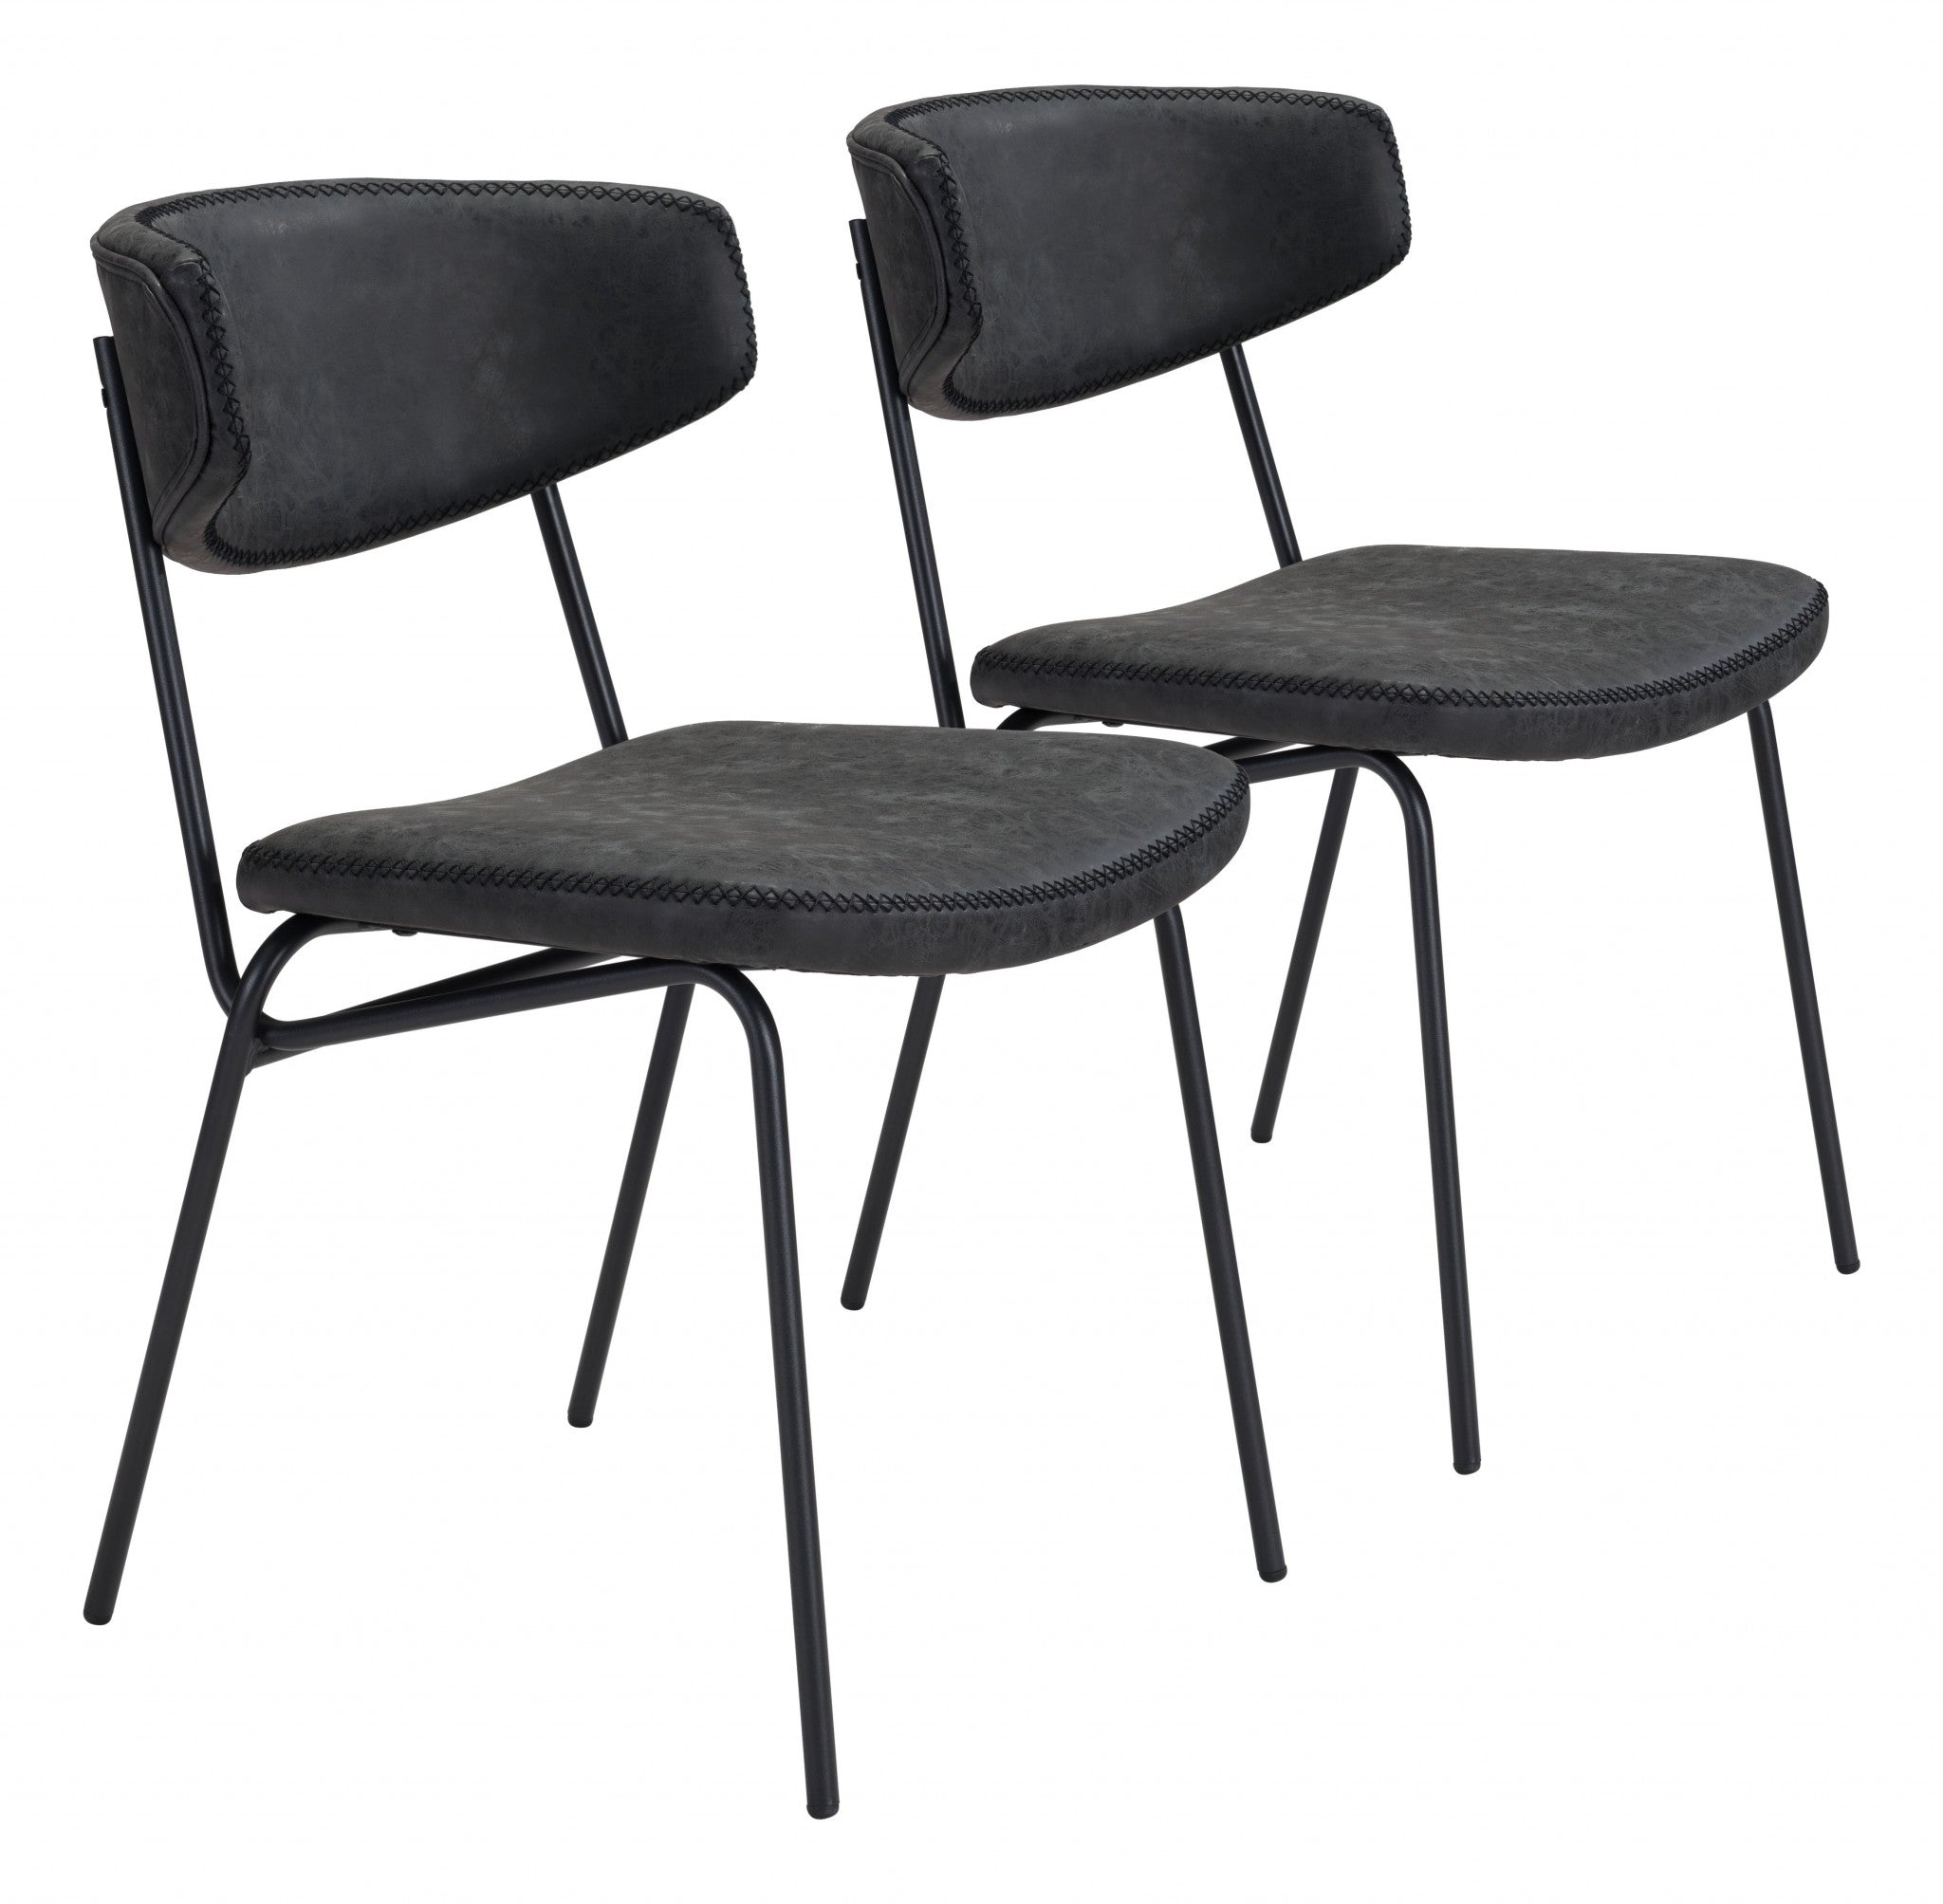 Set of Two Modern Minimalist Vintage Look Black Dining Chairs